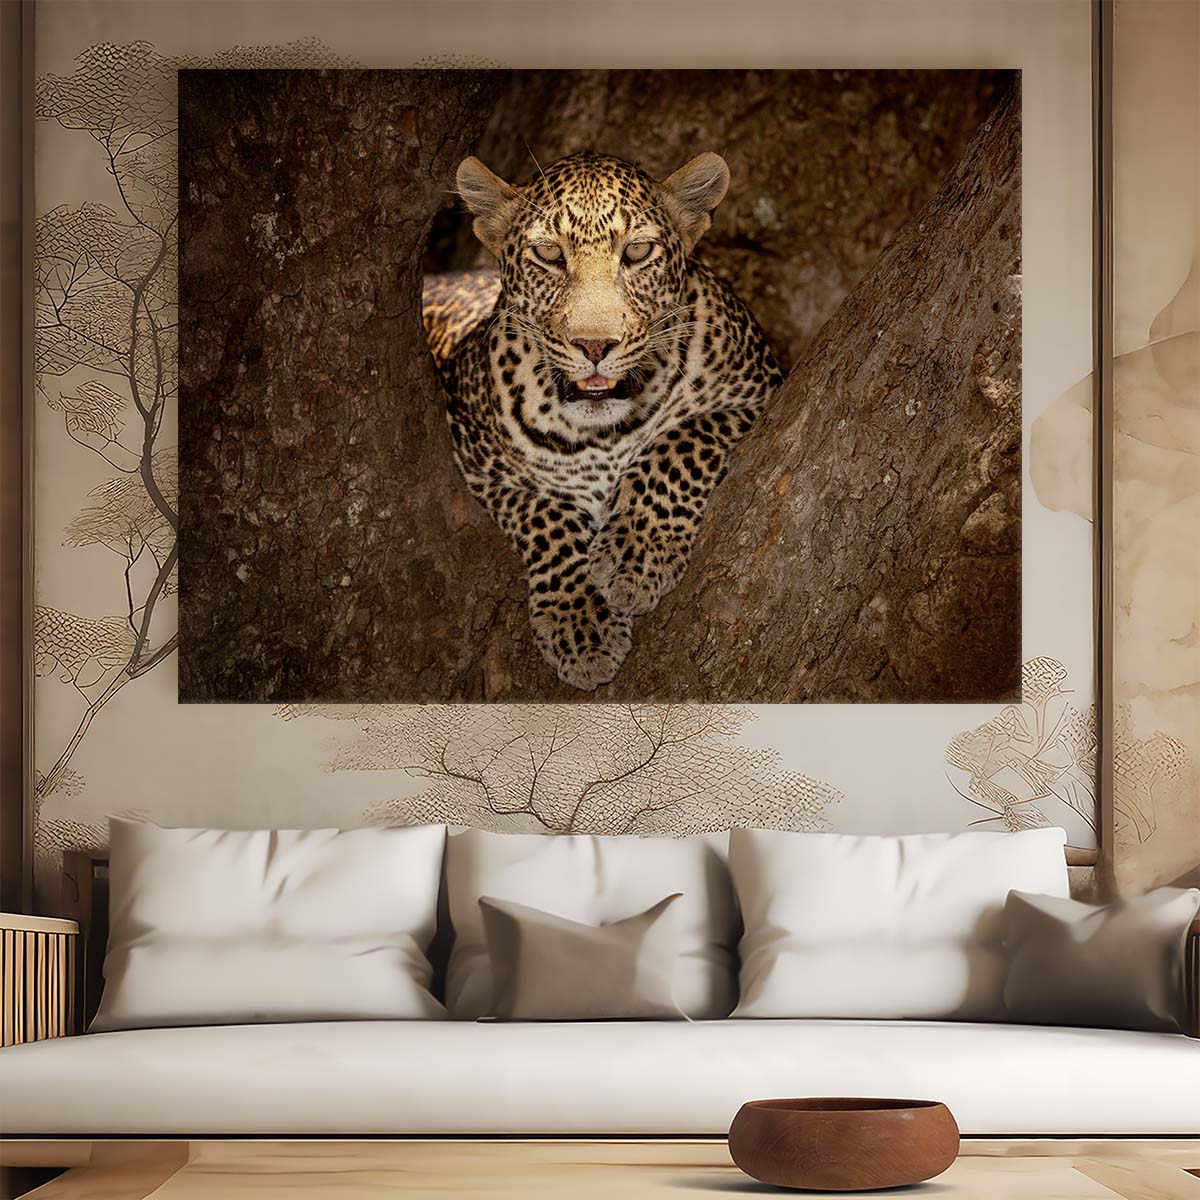 Masai Mara Leopard Camouflage Safari Wall Art by Luxuriance Designs. Made in USA.